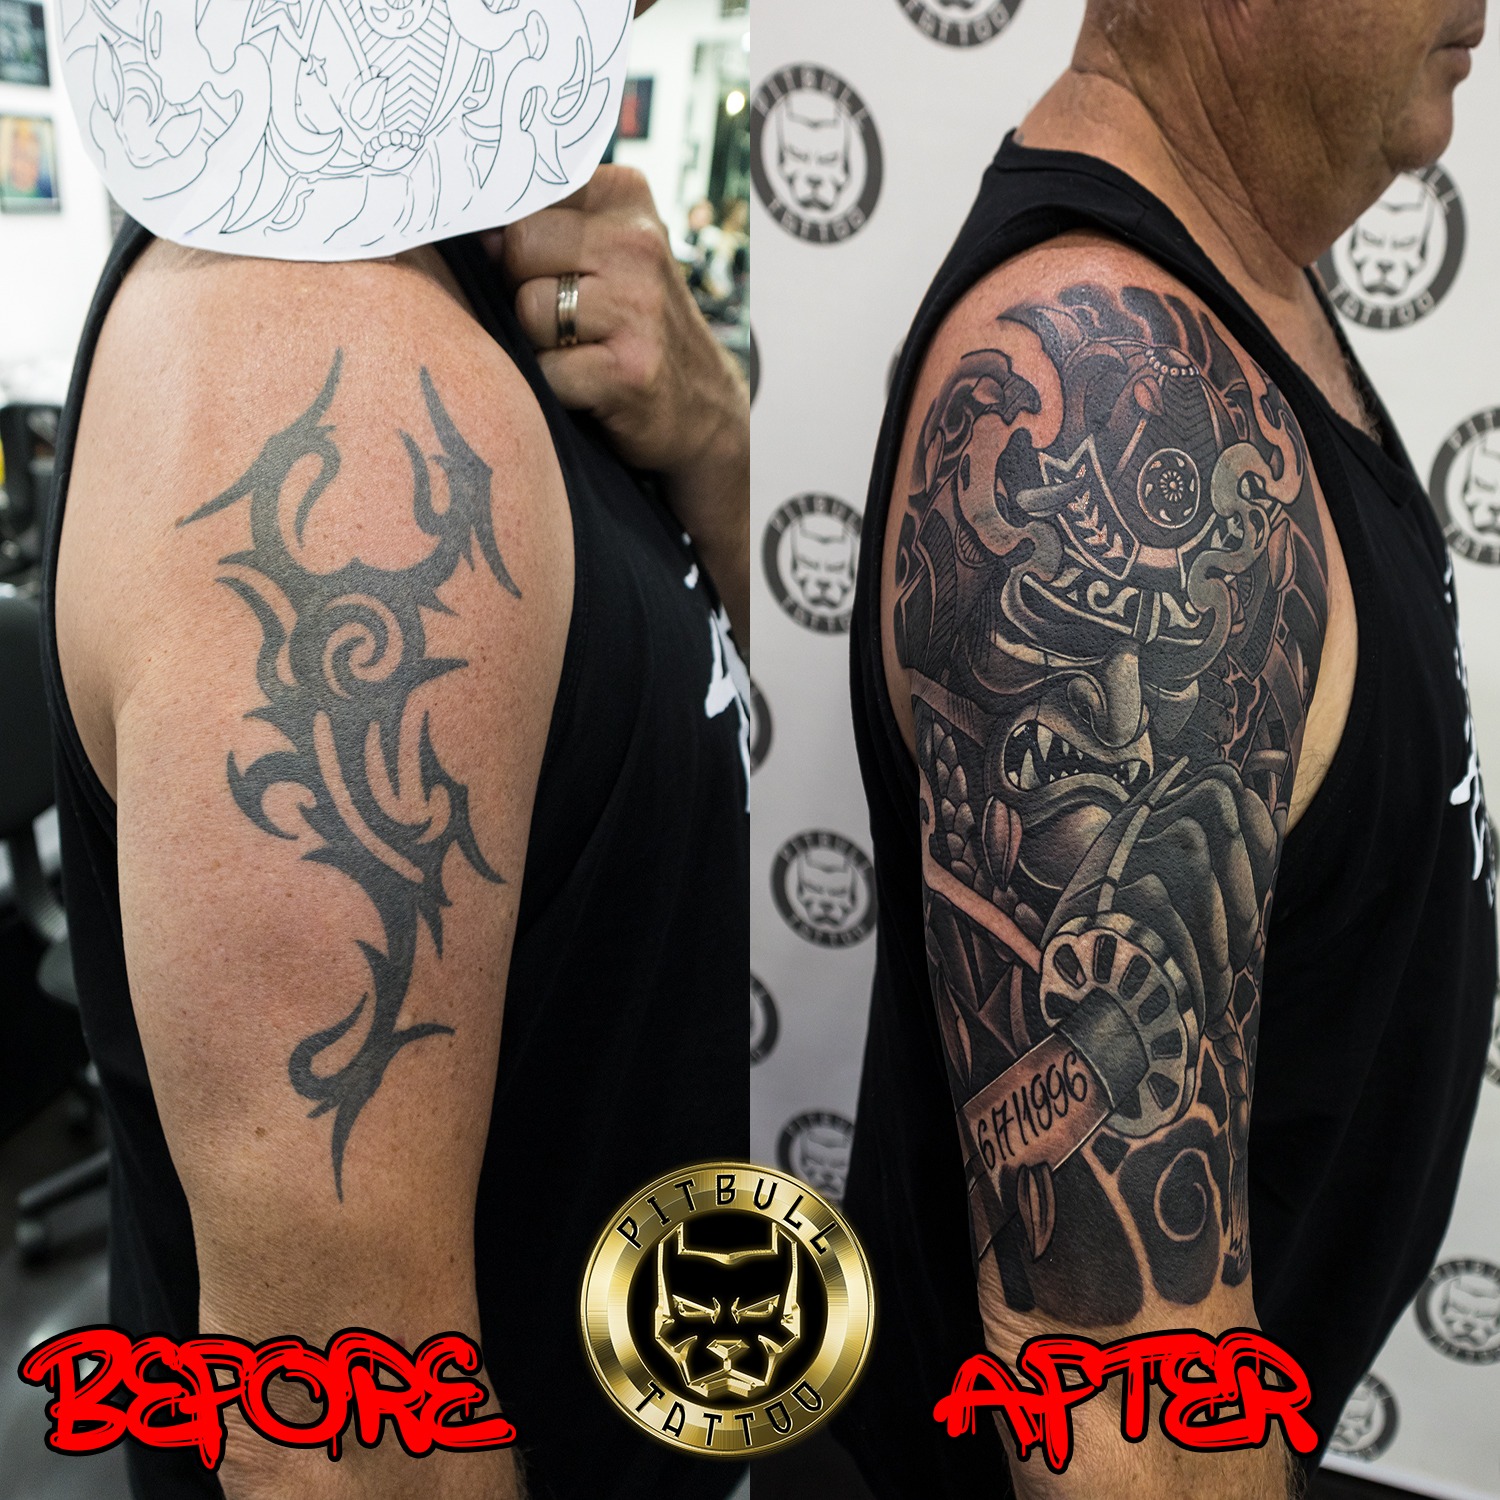 Cover Up Tattoo Specializations at Pitbull Tattoo